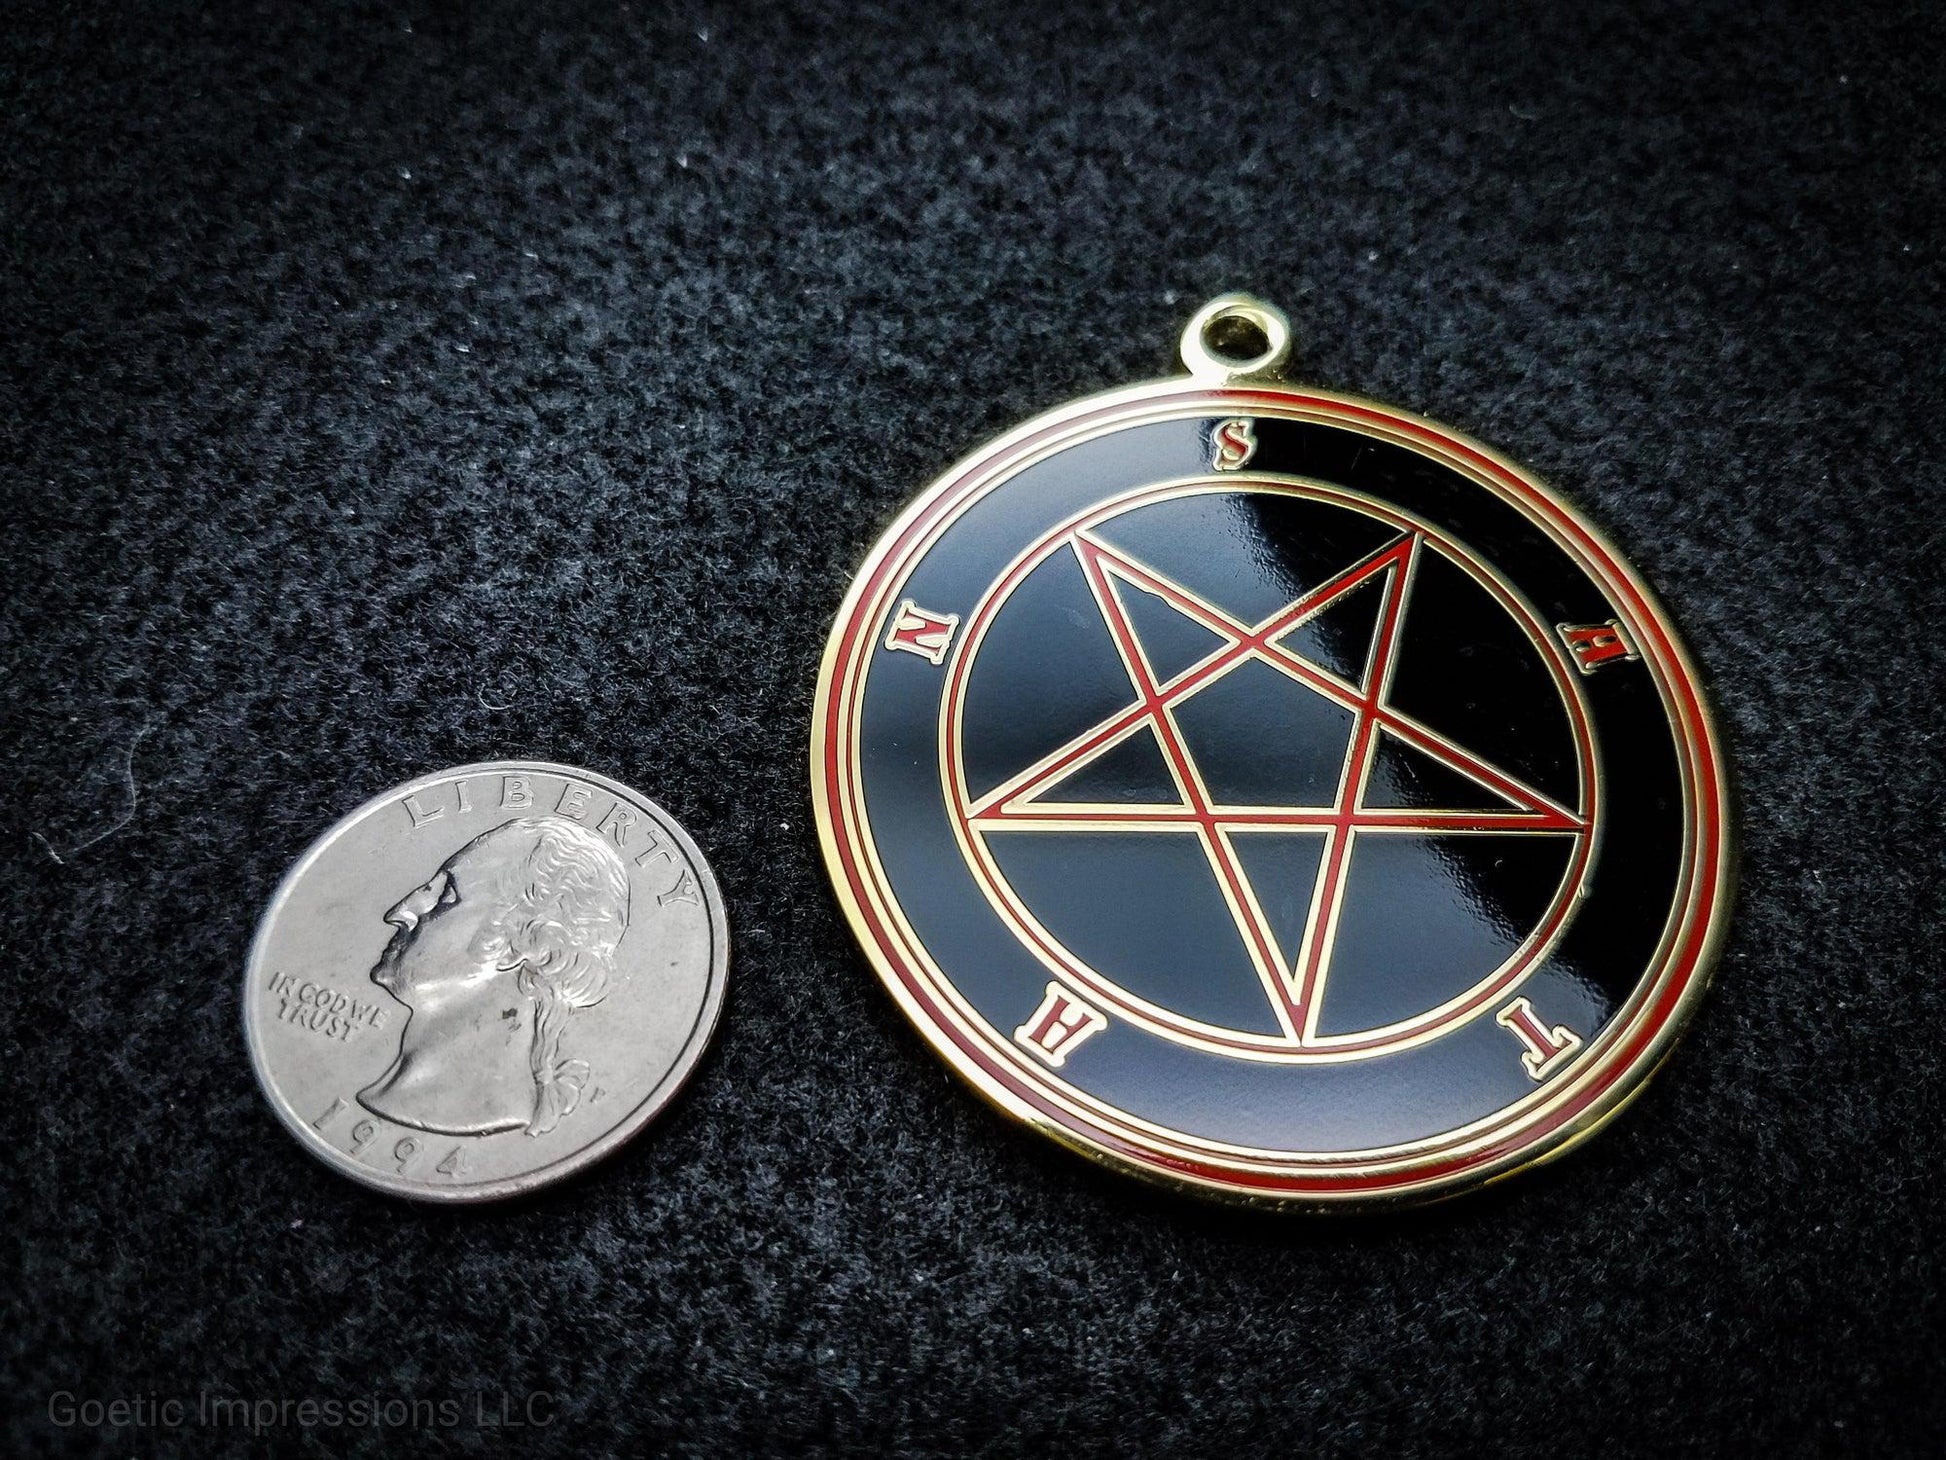 Black and Red Satanic medallion